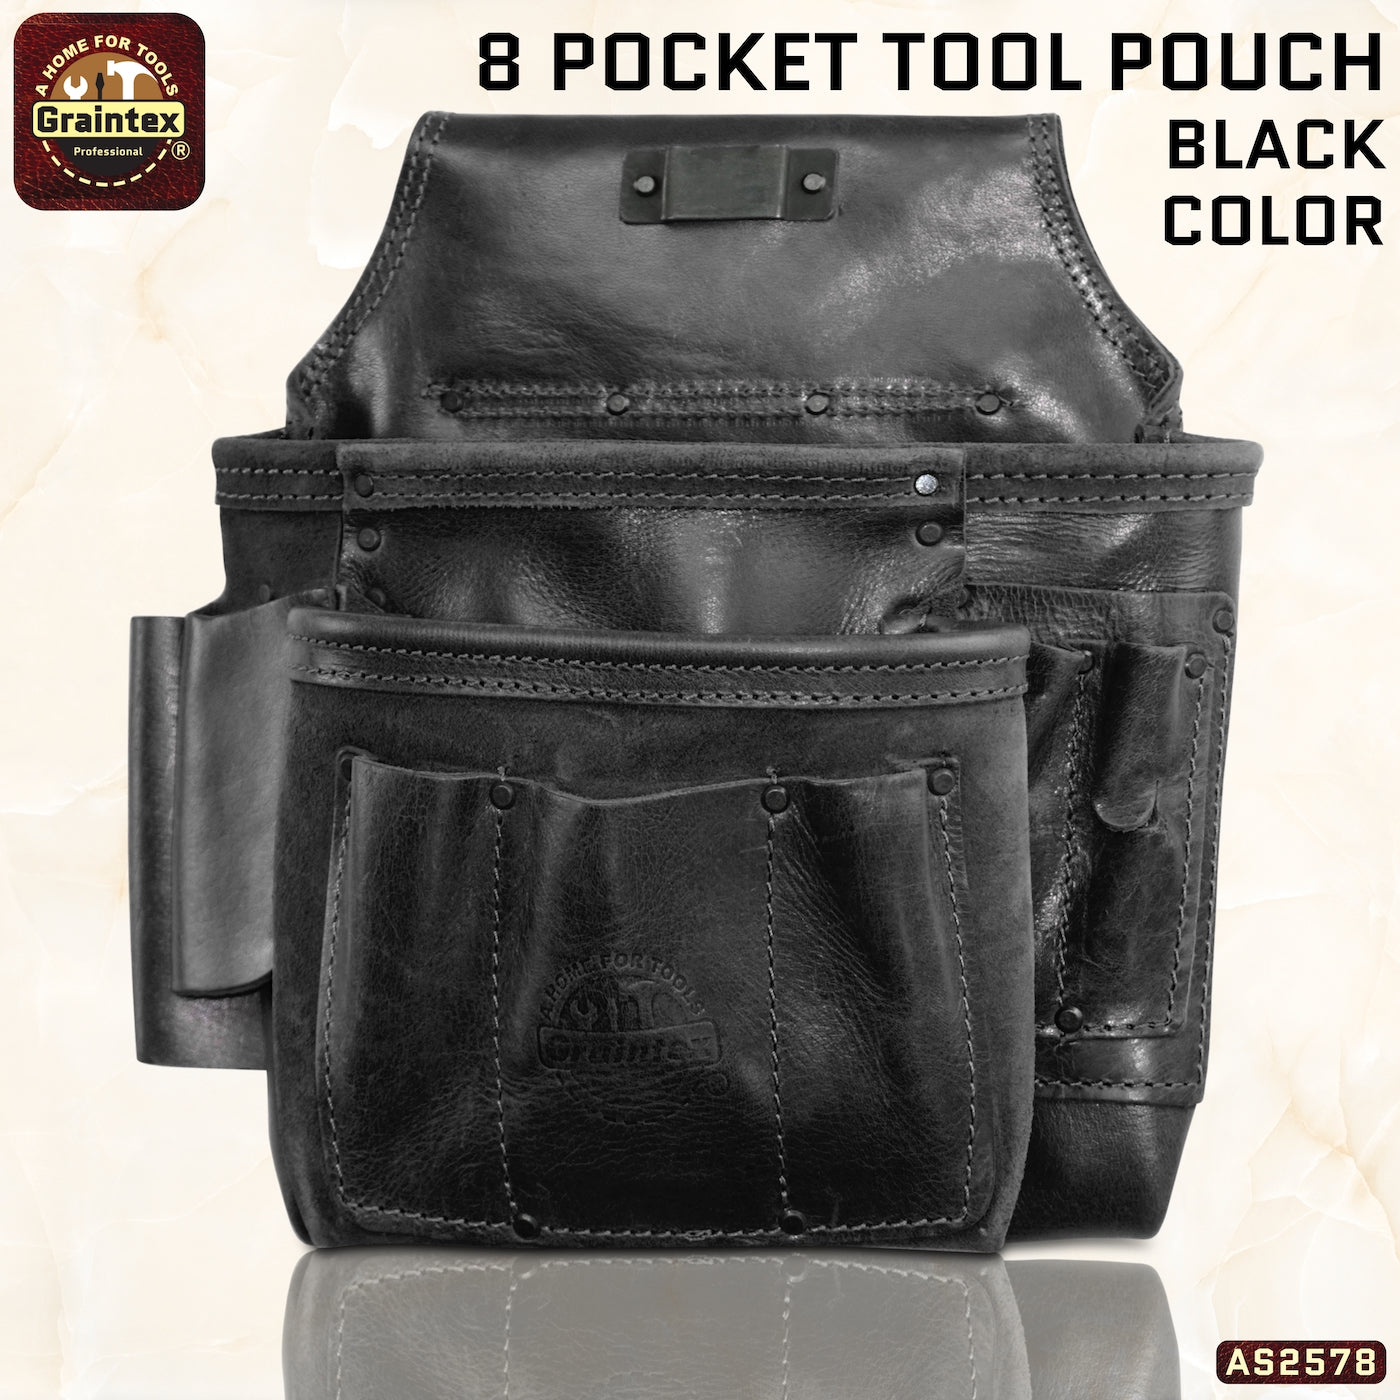 AS2578 :: 8 Pocket Framer’s Tool Pouch Ambassador Series Black Color Top Grain Leather